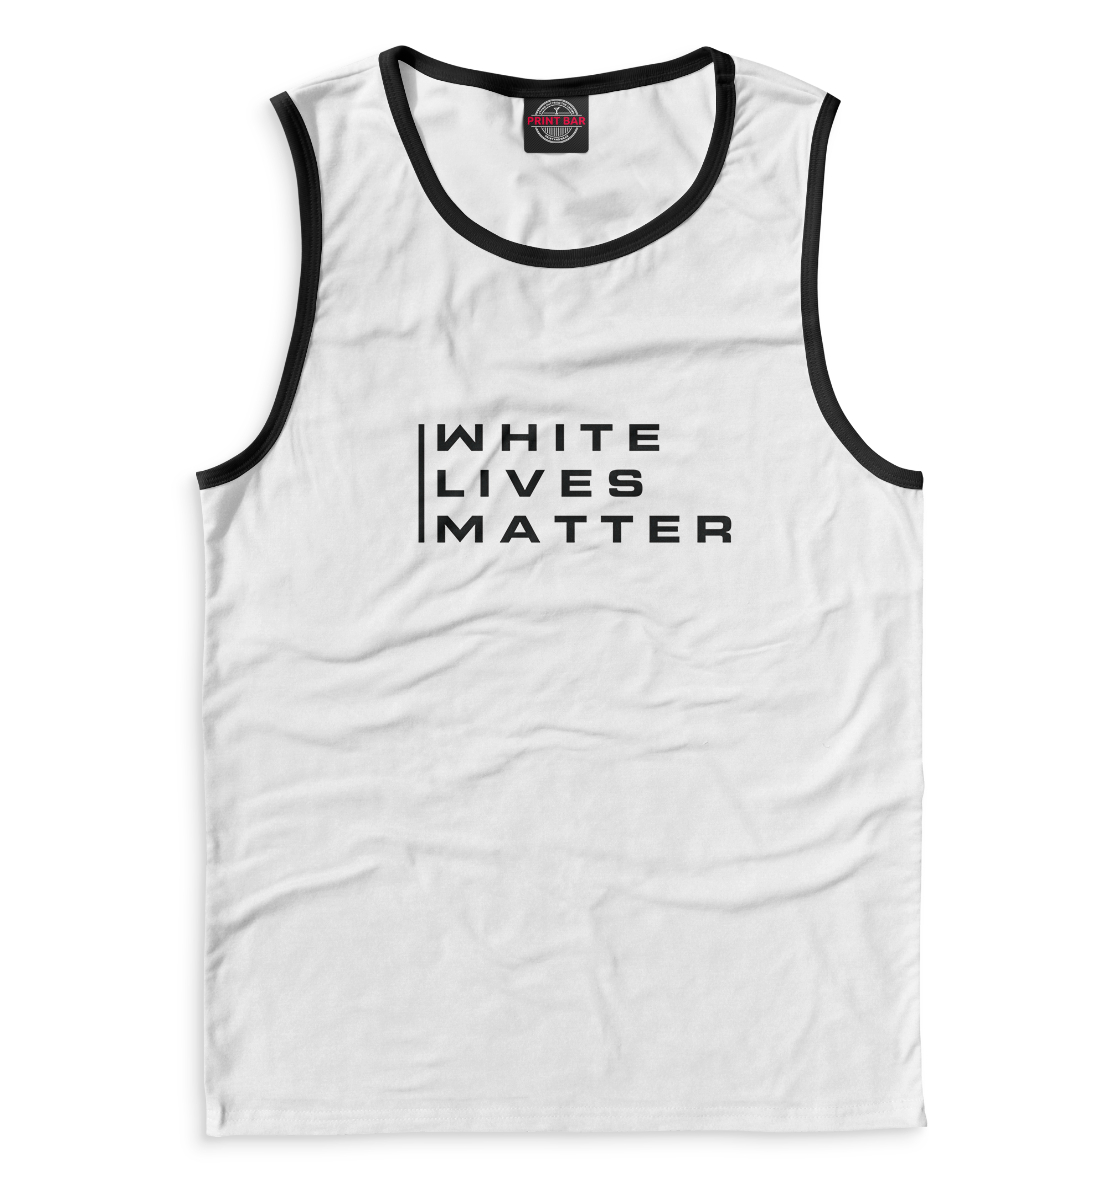 Мужская Майка с надписью White lives matter, артикул NDP-493114-may-2mp